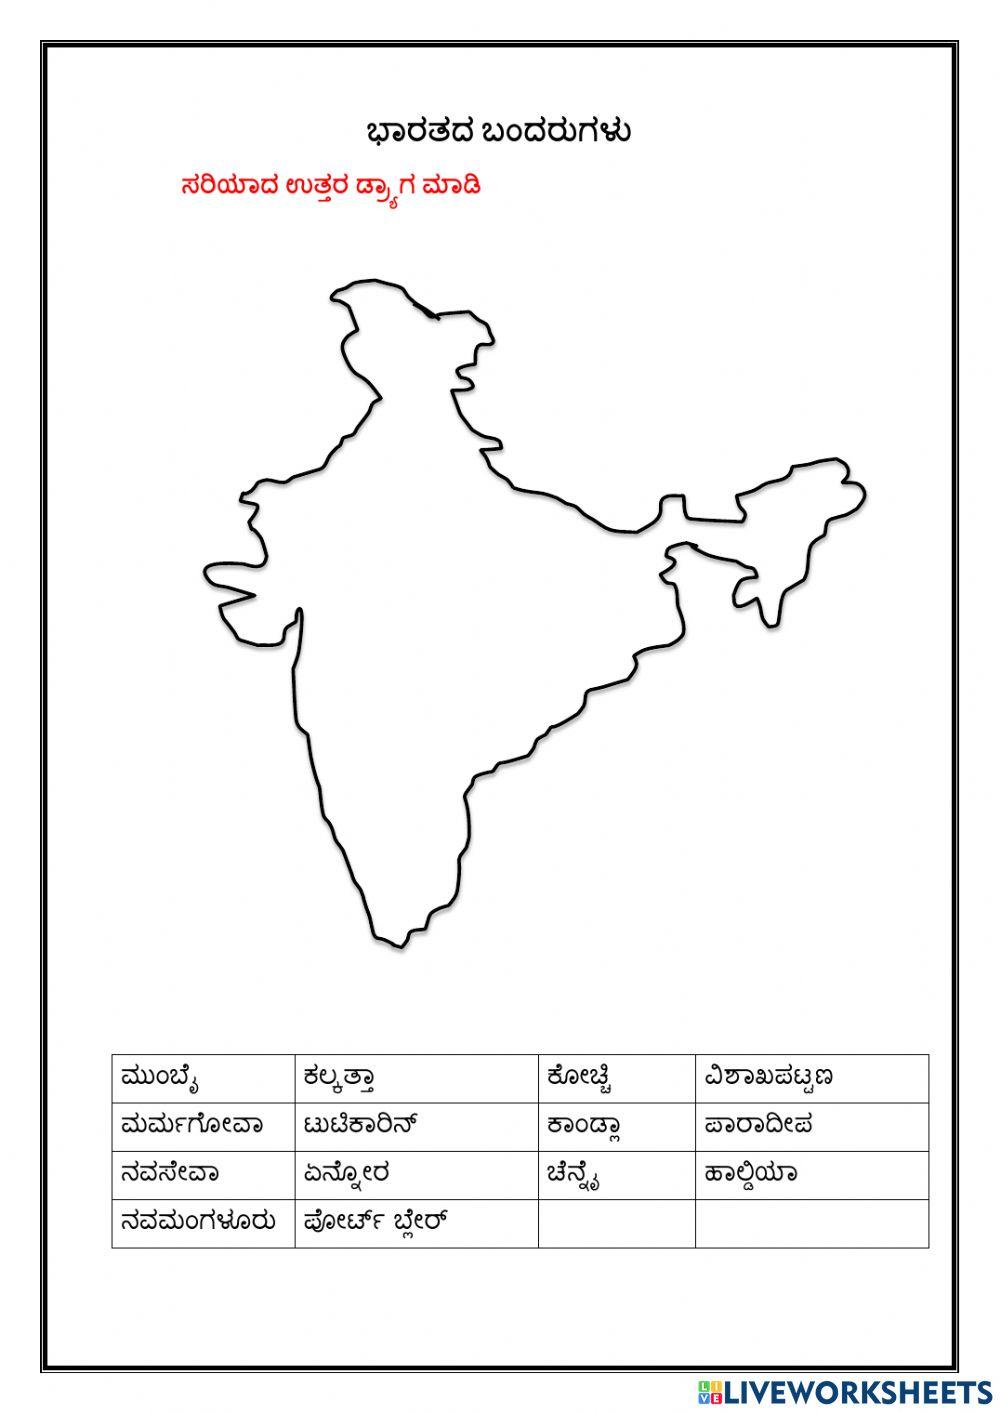 Indian land resource(work sheet 1) 10th class